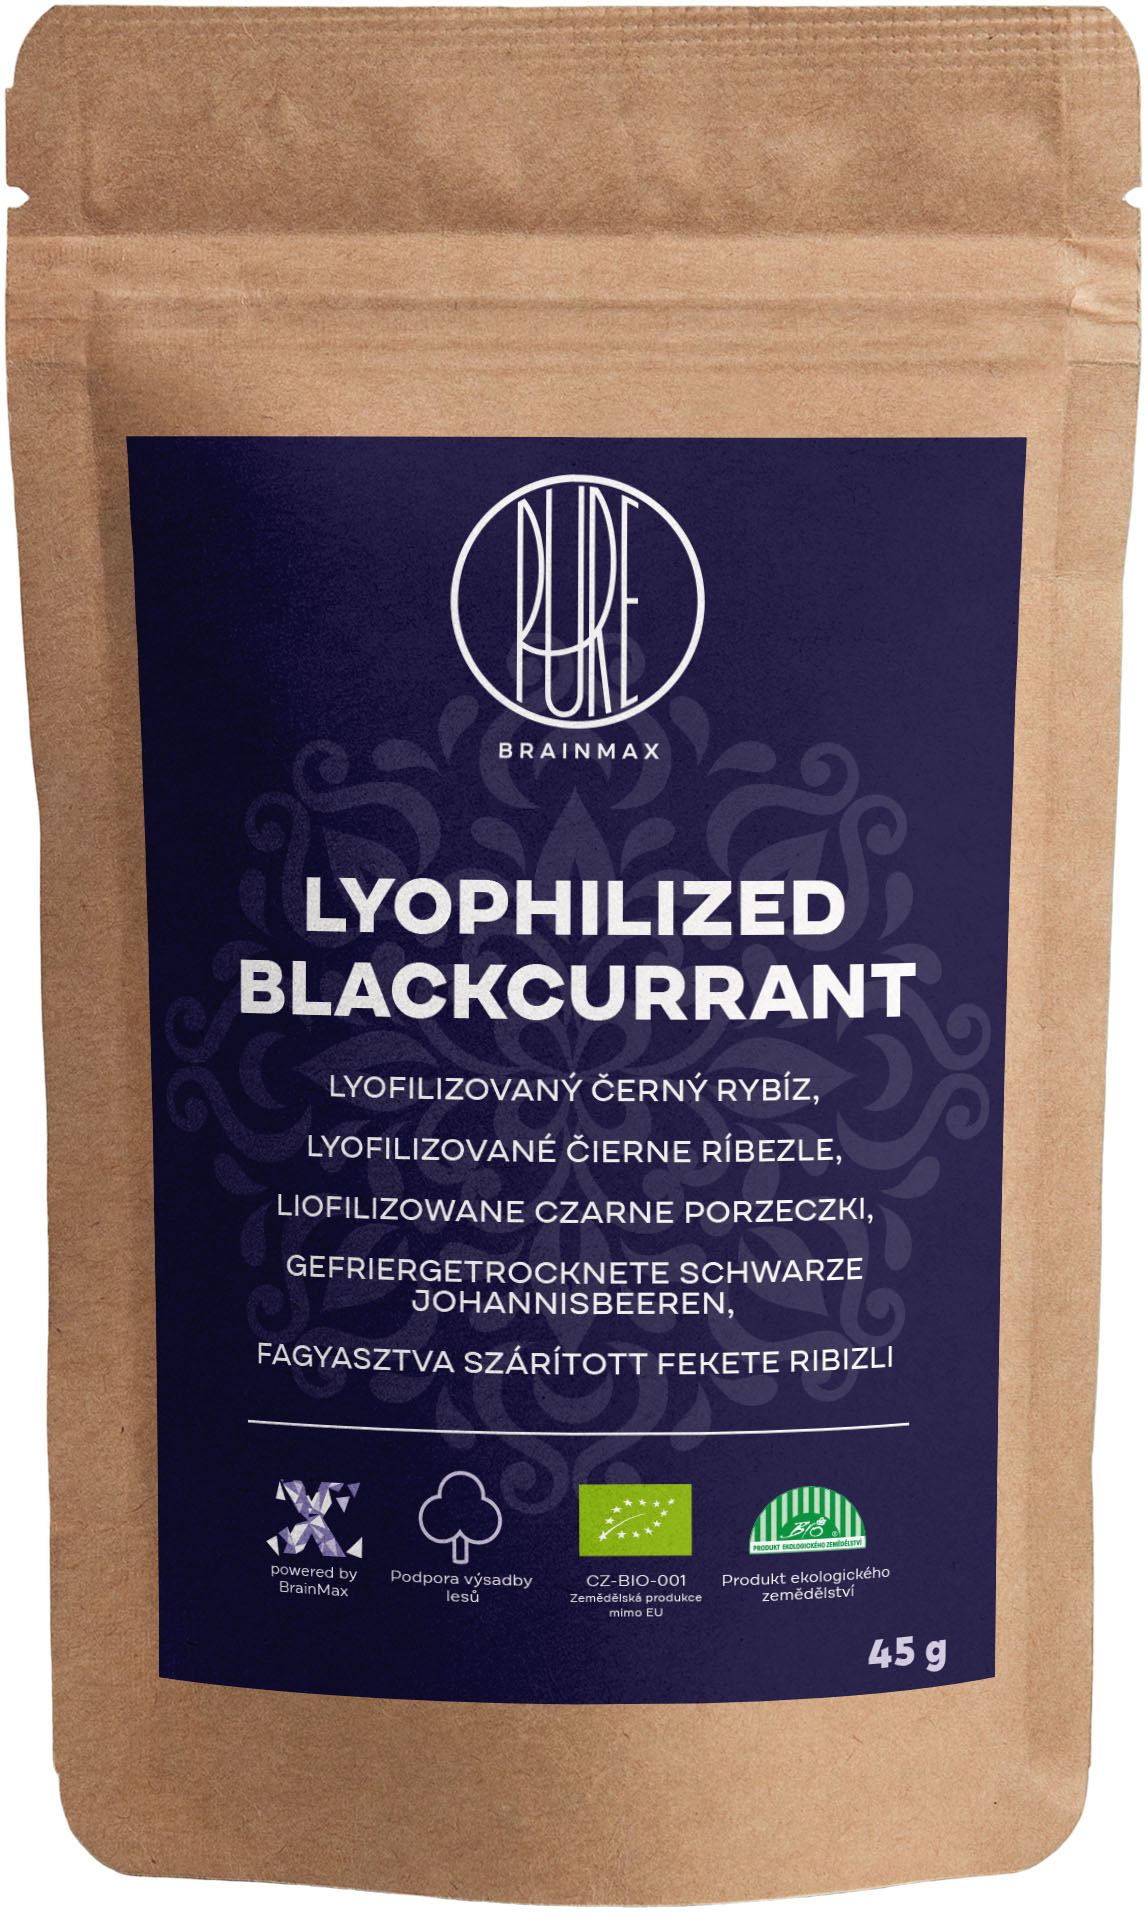 BrainMax Pure Lyophilized Blackcurrant, Lyofilizovaný černý rybíz, BIO, 45 g *CZ-BIO-001 certifikát